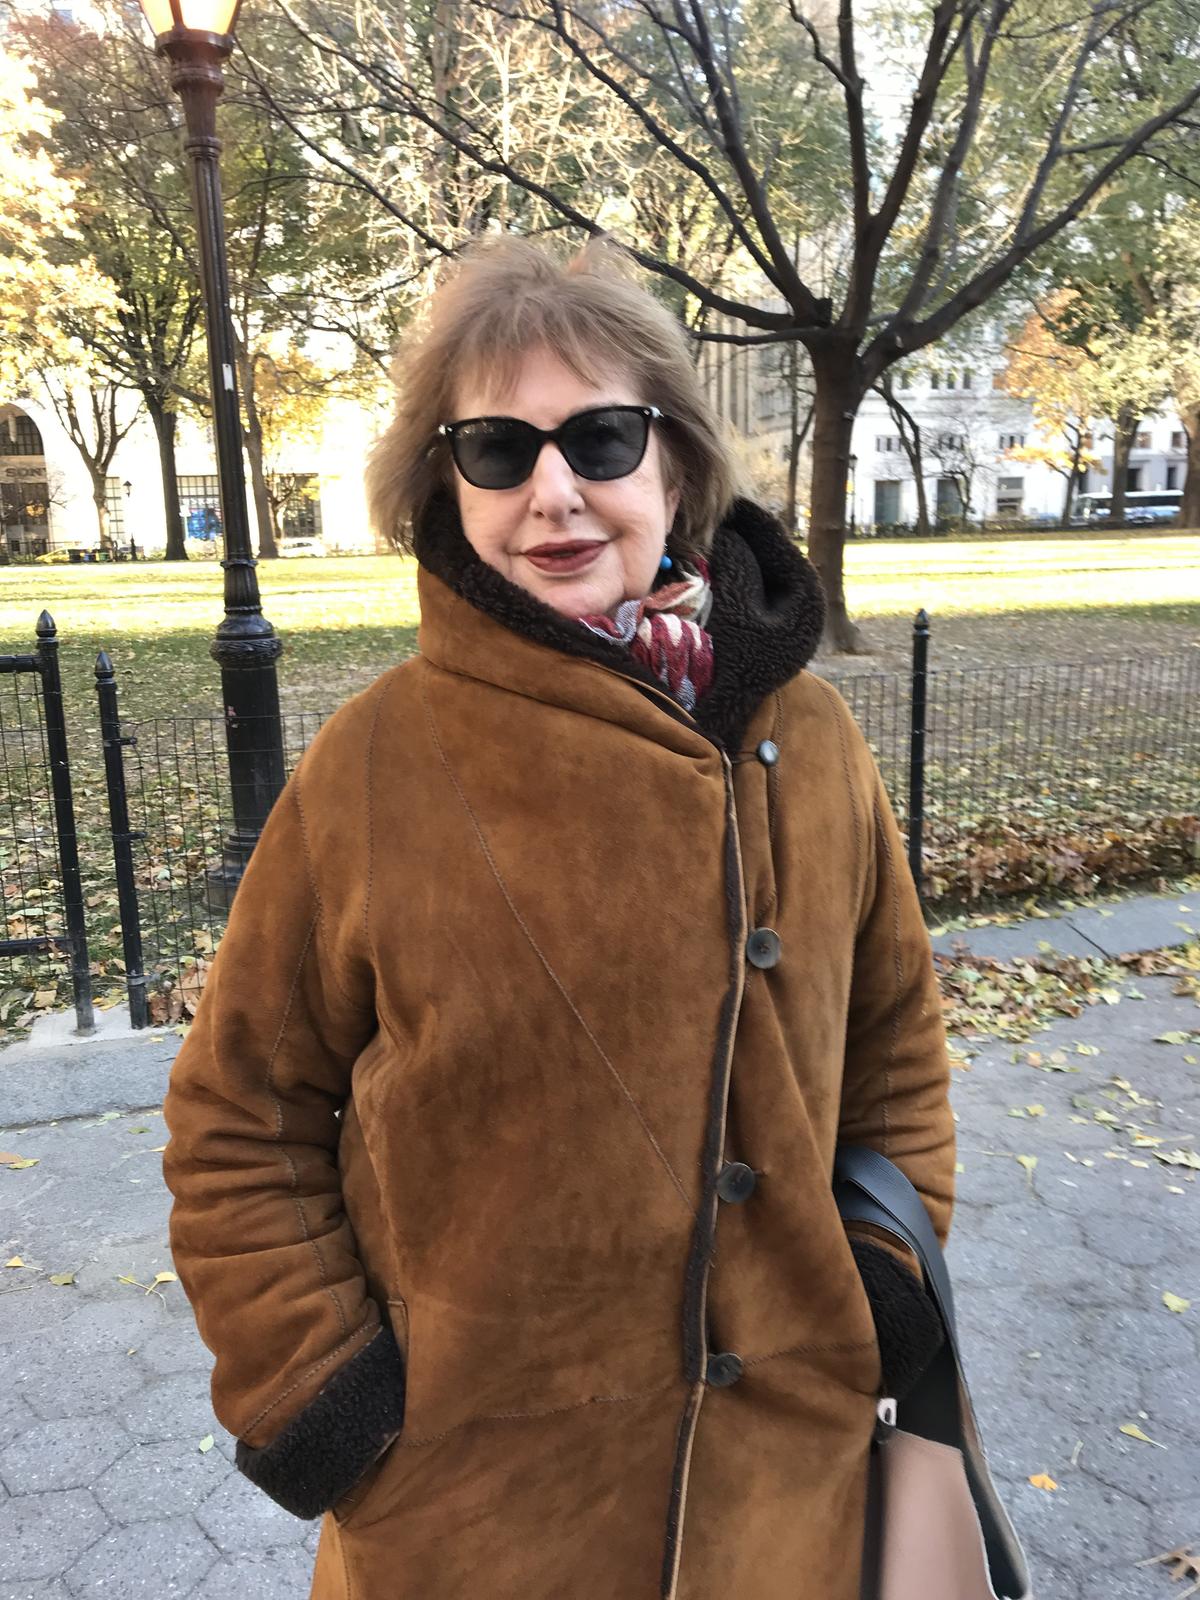 Jenny G in Maddison Square Park, New York, on Nov. 23, 2018. (Stuart Liess/The Epoch Times)